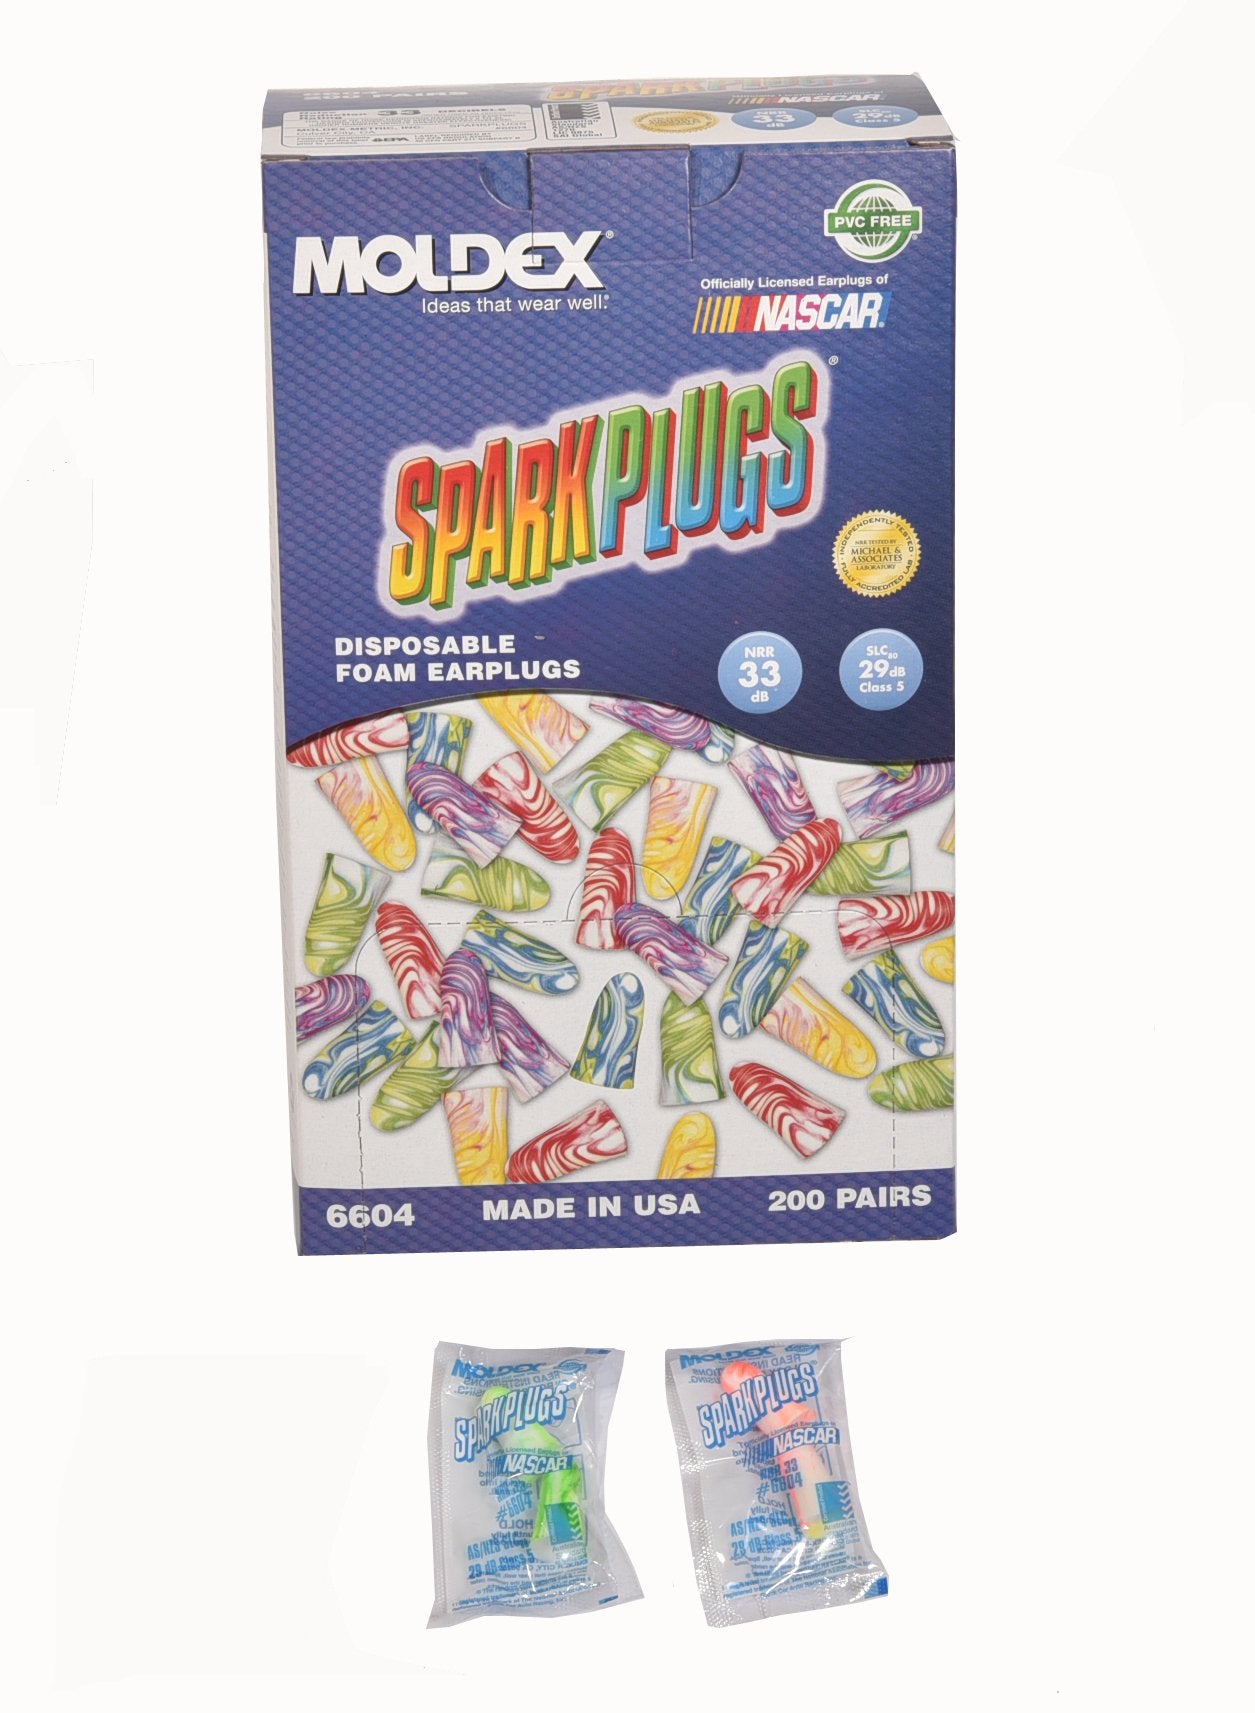 Moldex Sparkplug Foam Earplugs - Work World - Workwear, Work Boots, Safety Gear